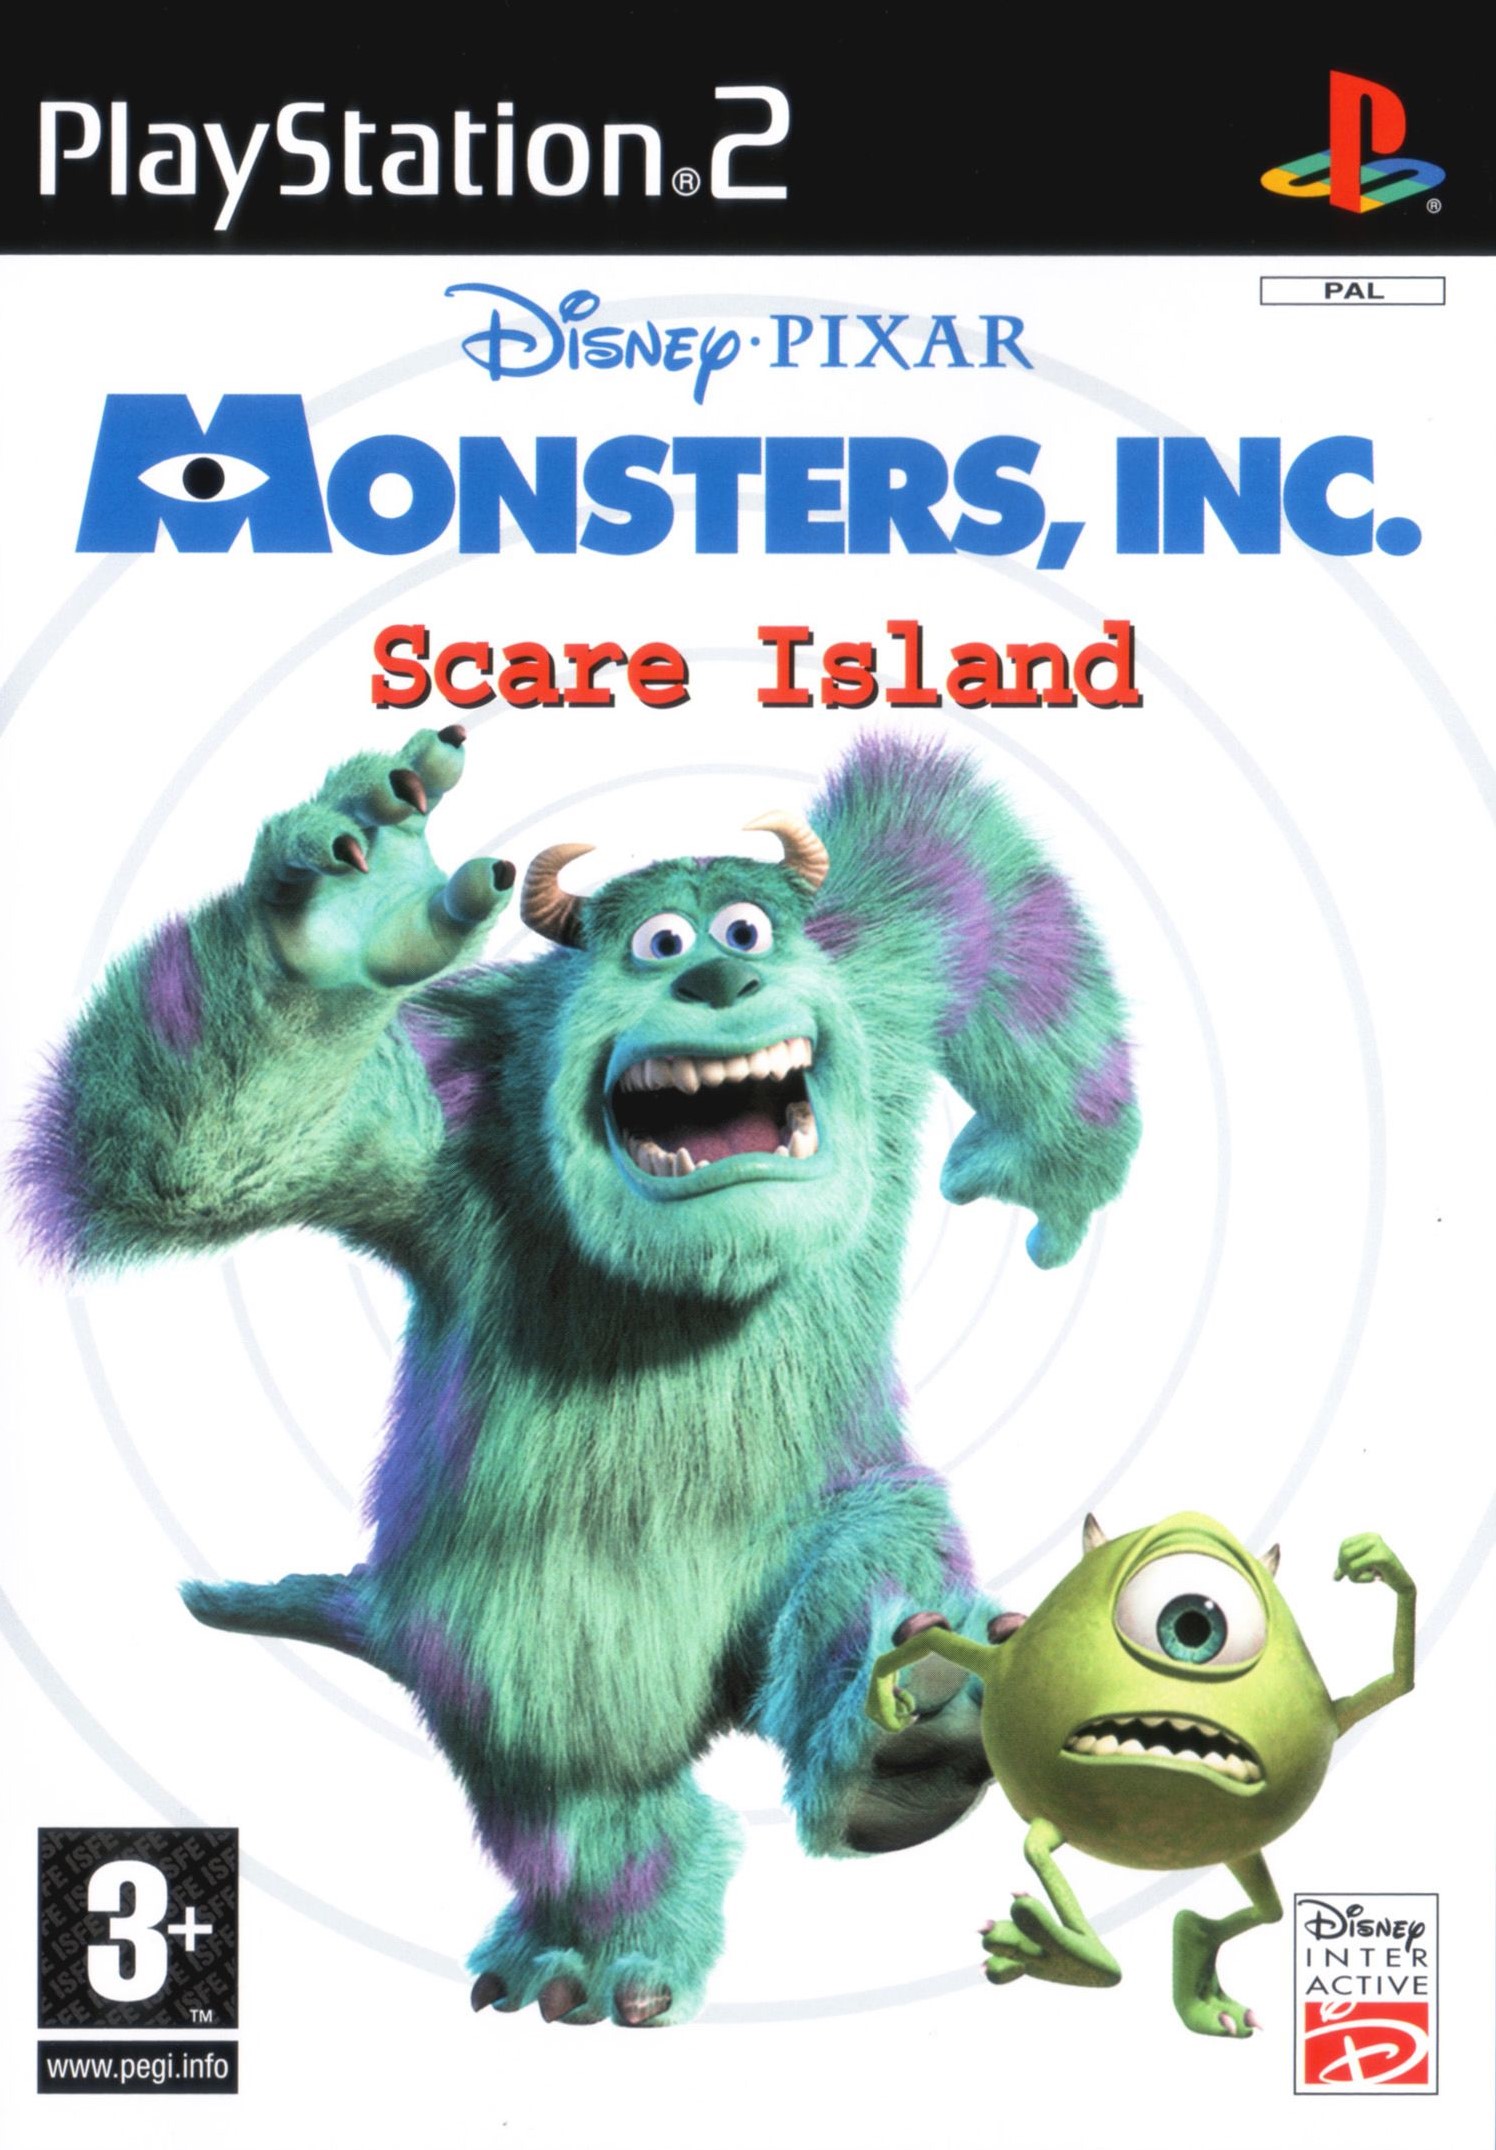 Disney Pixar Monsters Inc Scare Island